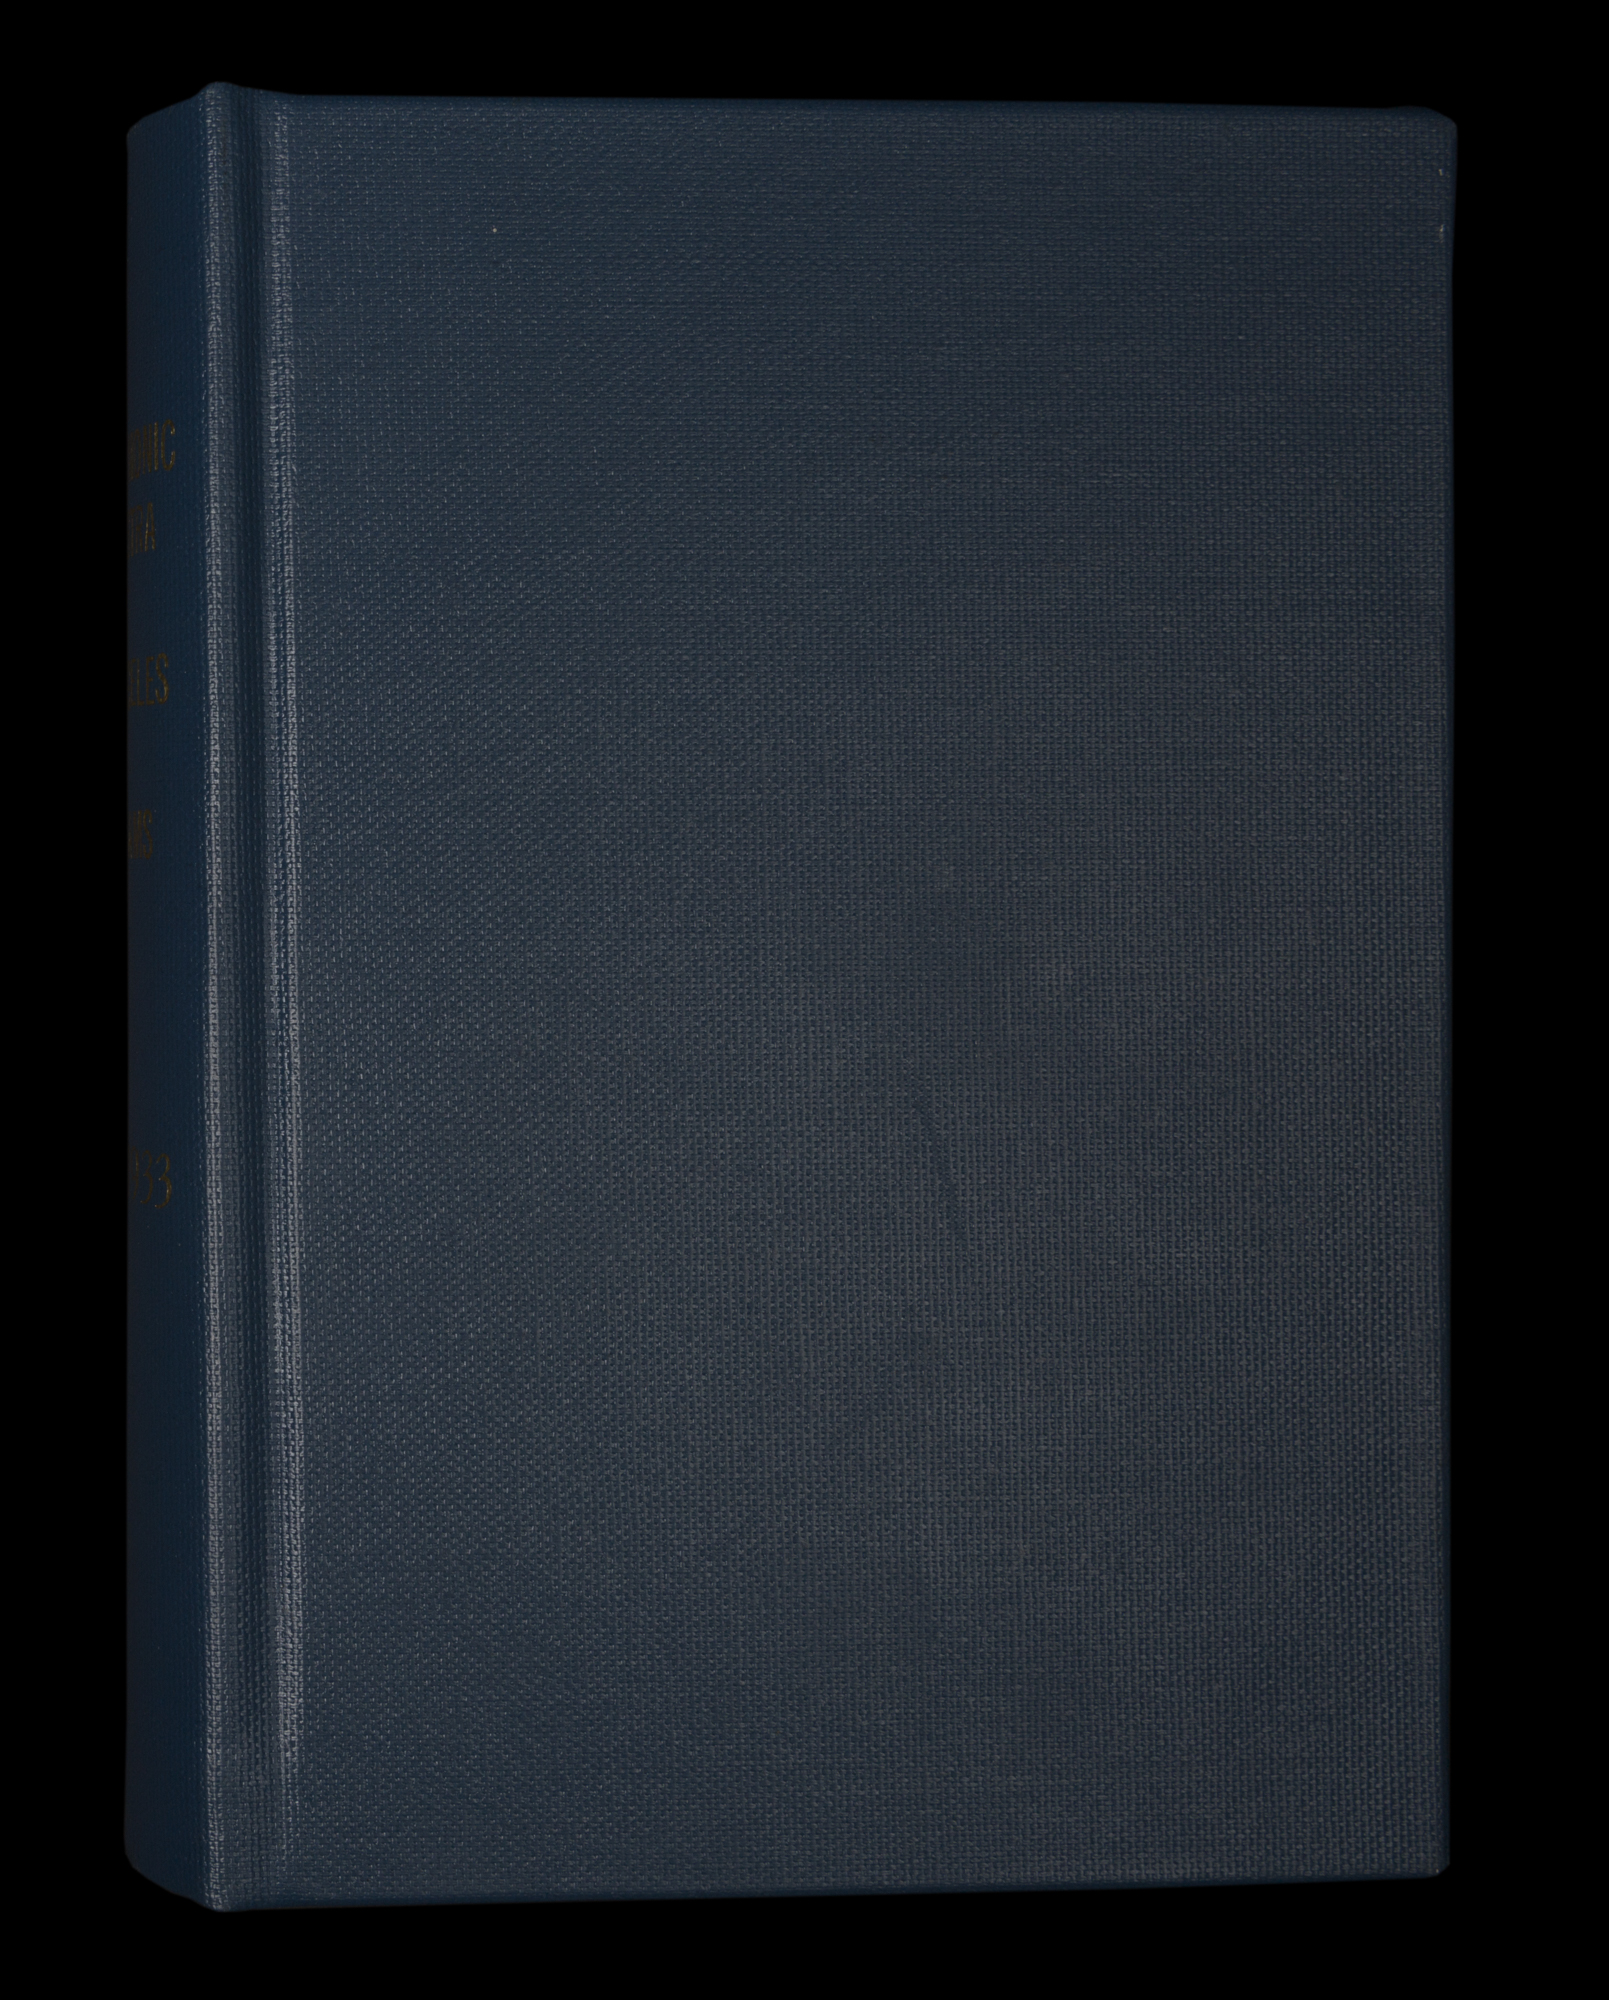 LAPO_ProgramBook_Cover_1929-1930.jpg